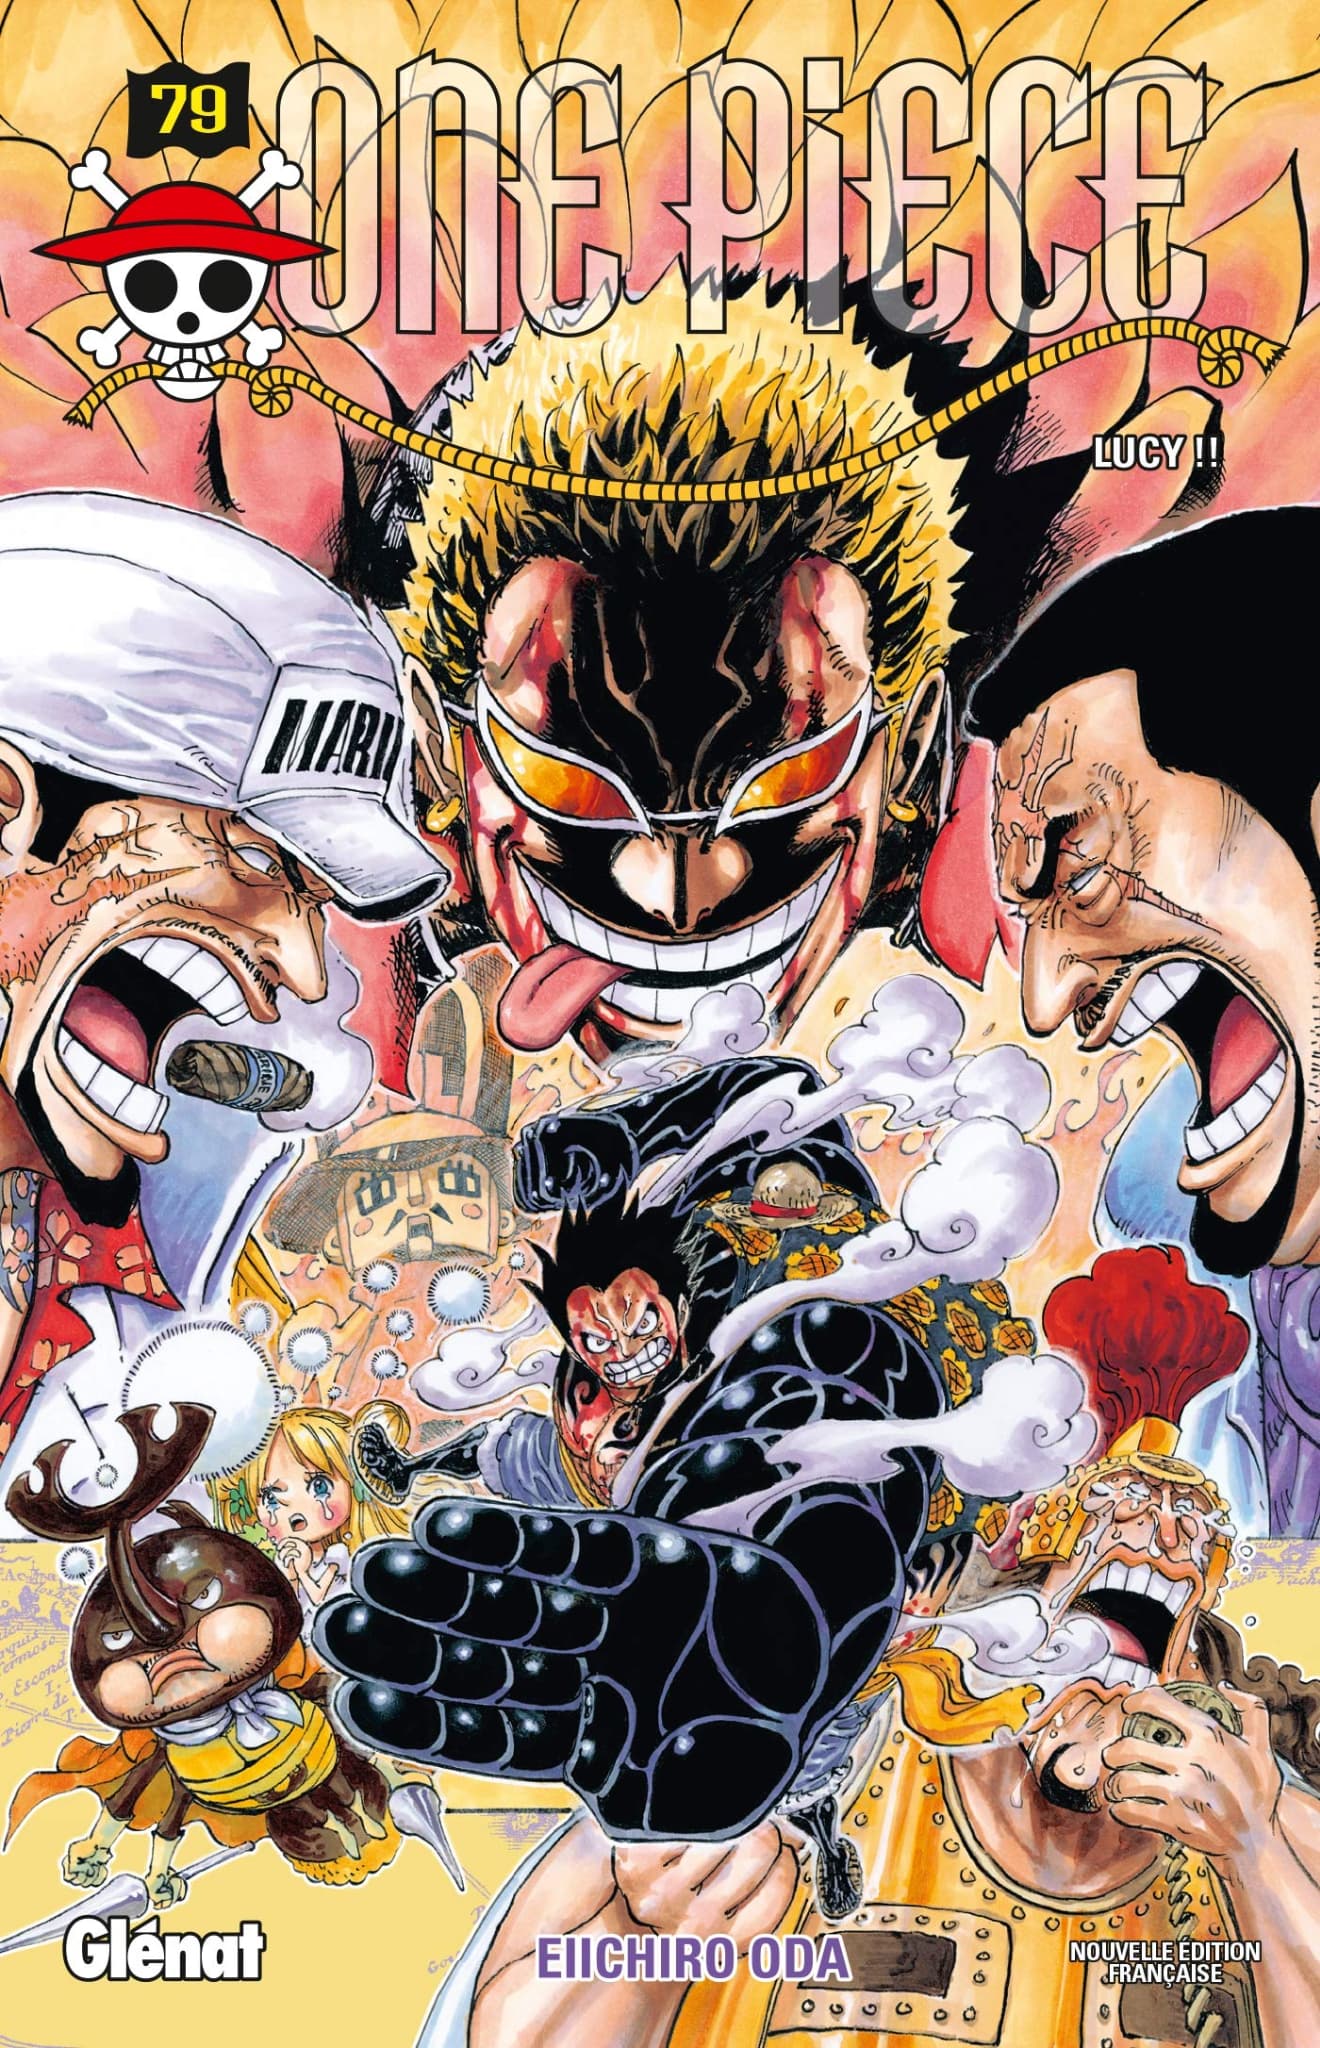 Manga One Piece tome 106. 